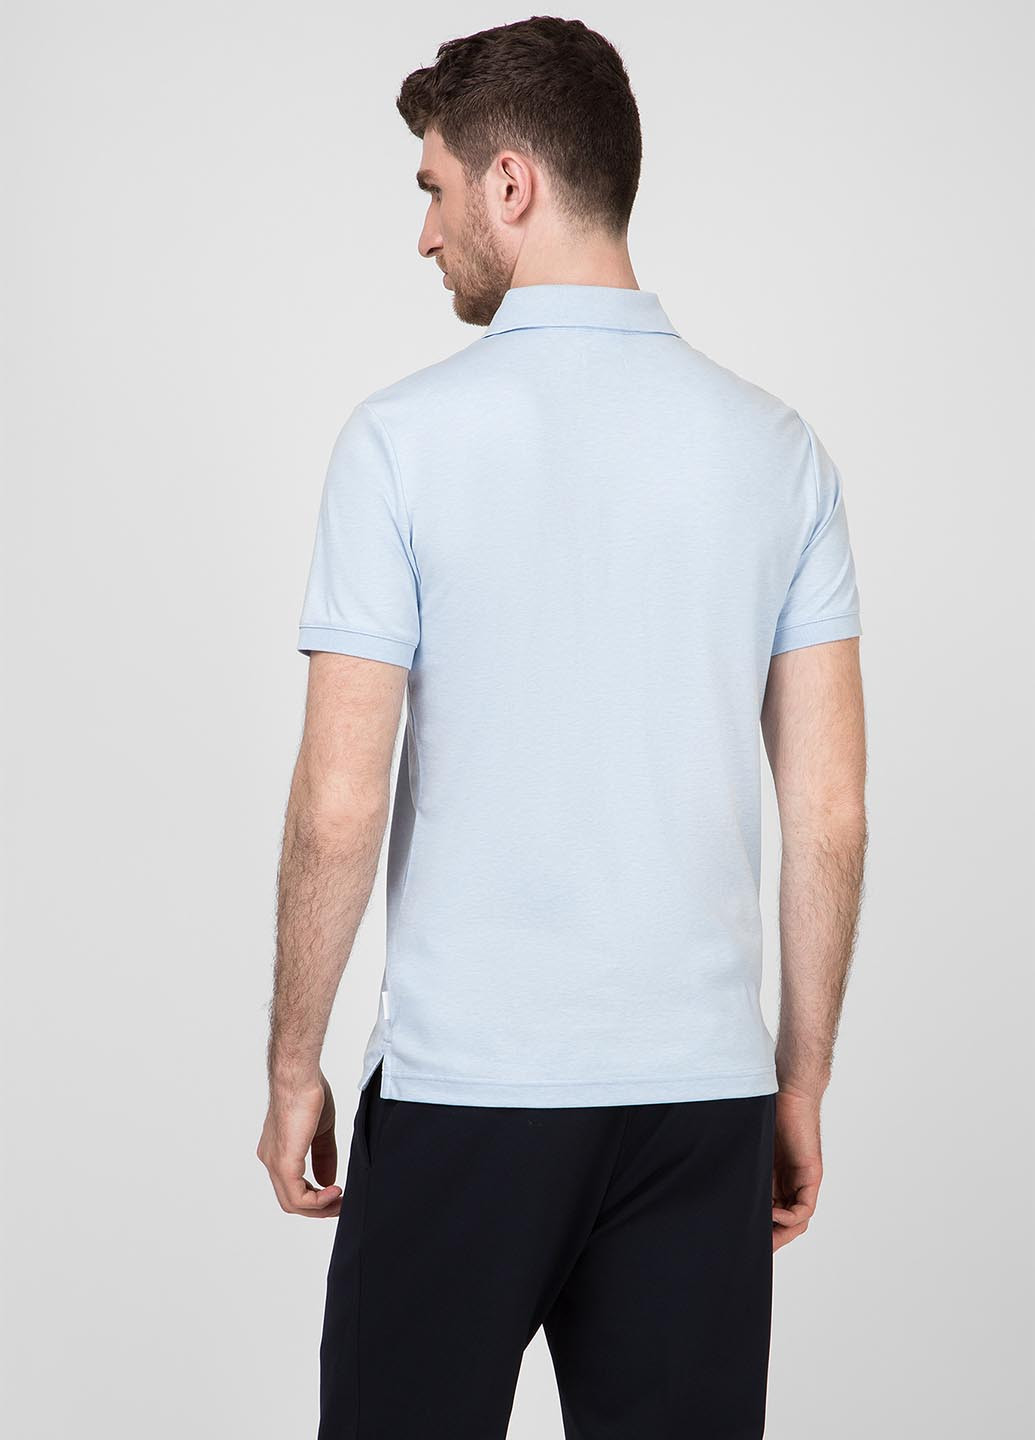 Голубой футболка-поло для мужчин Calvin Klein однотонная